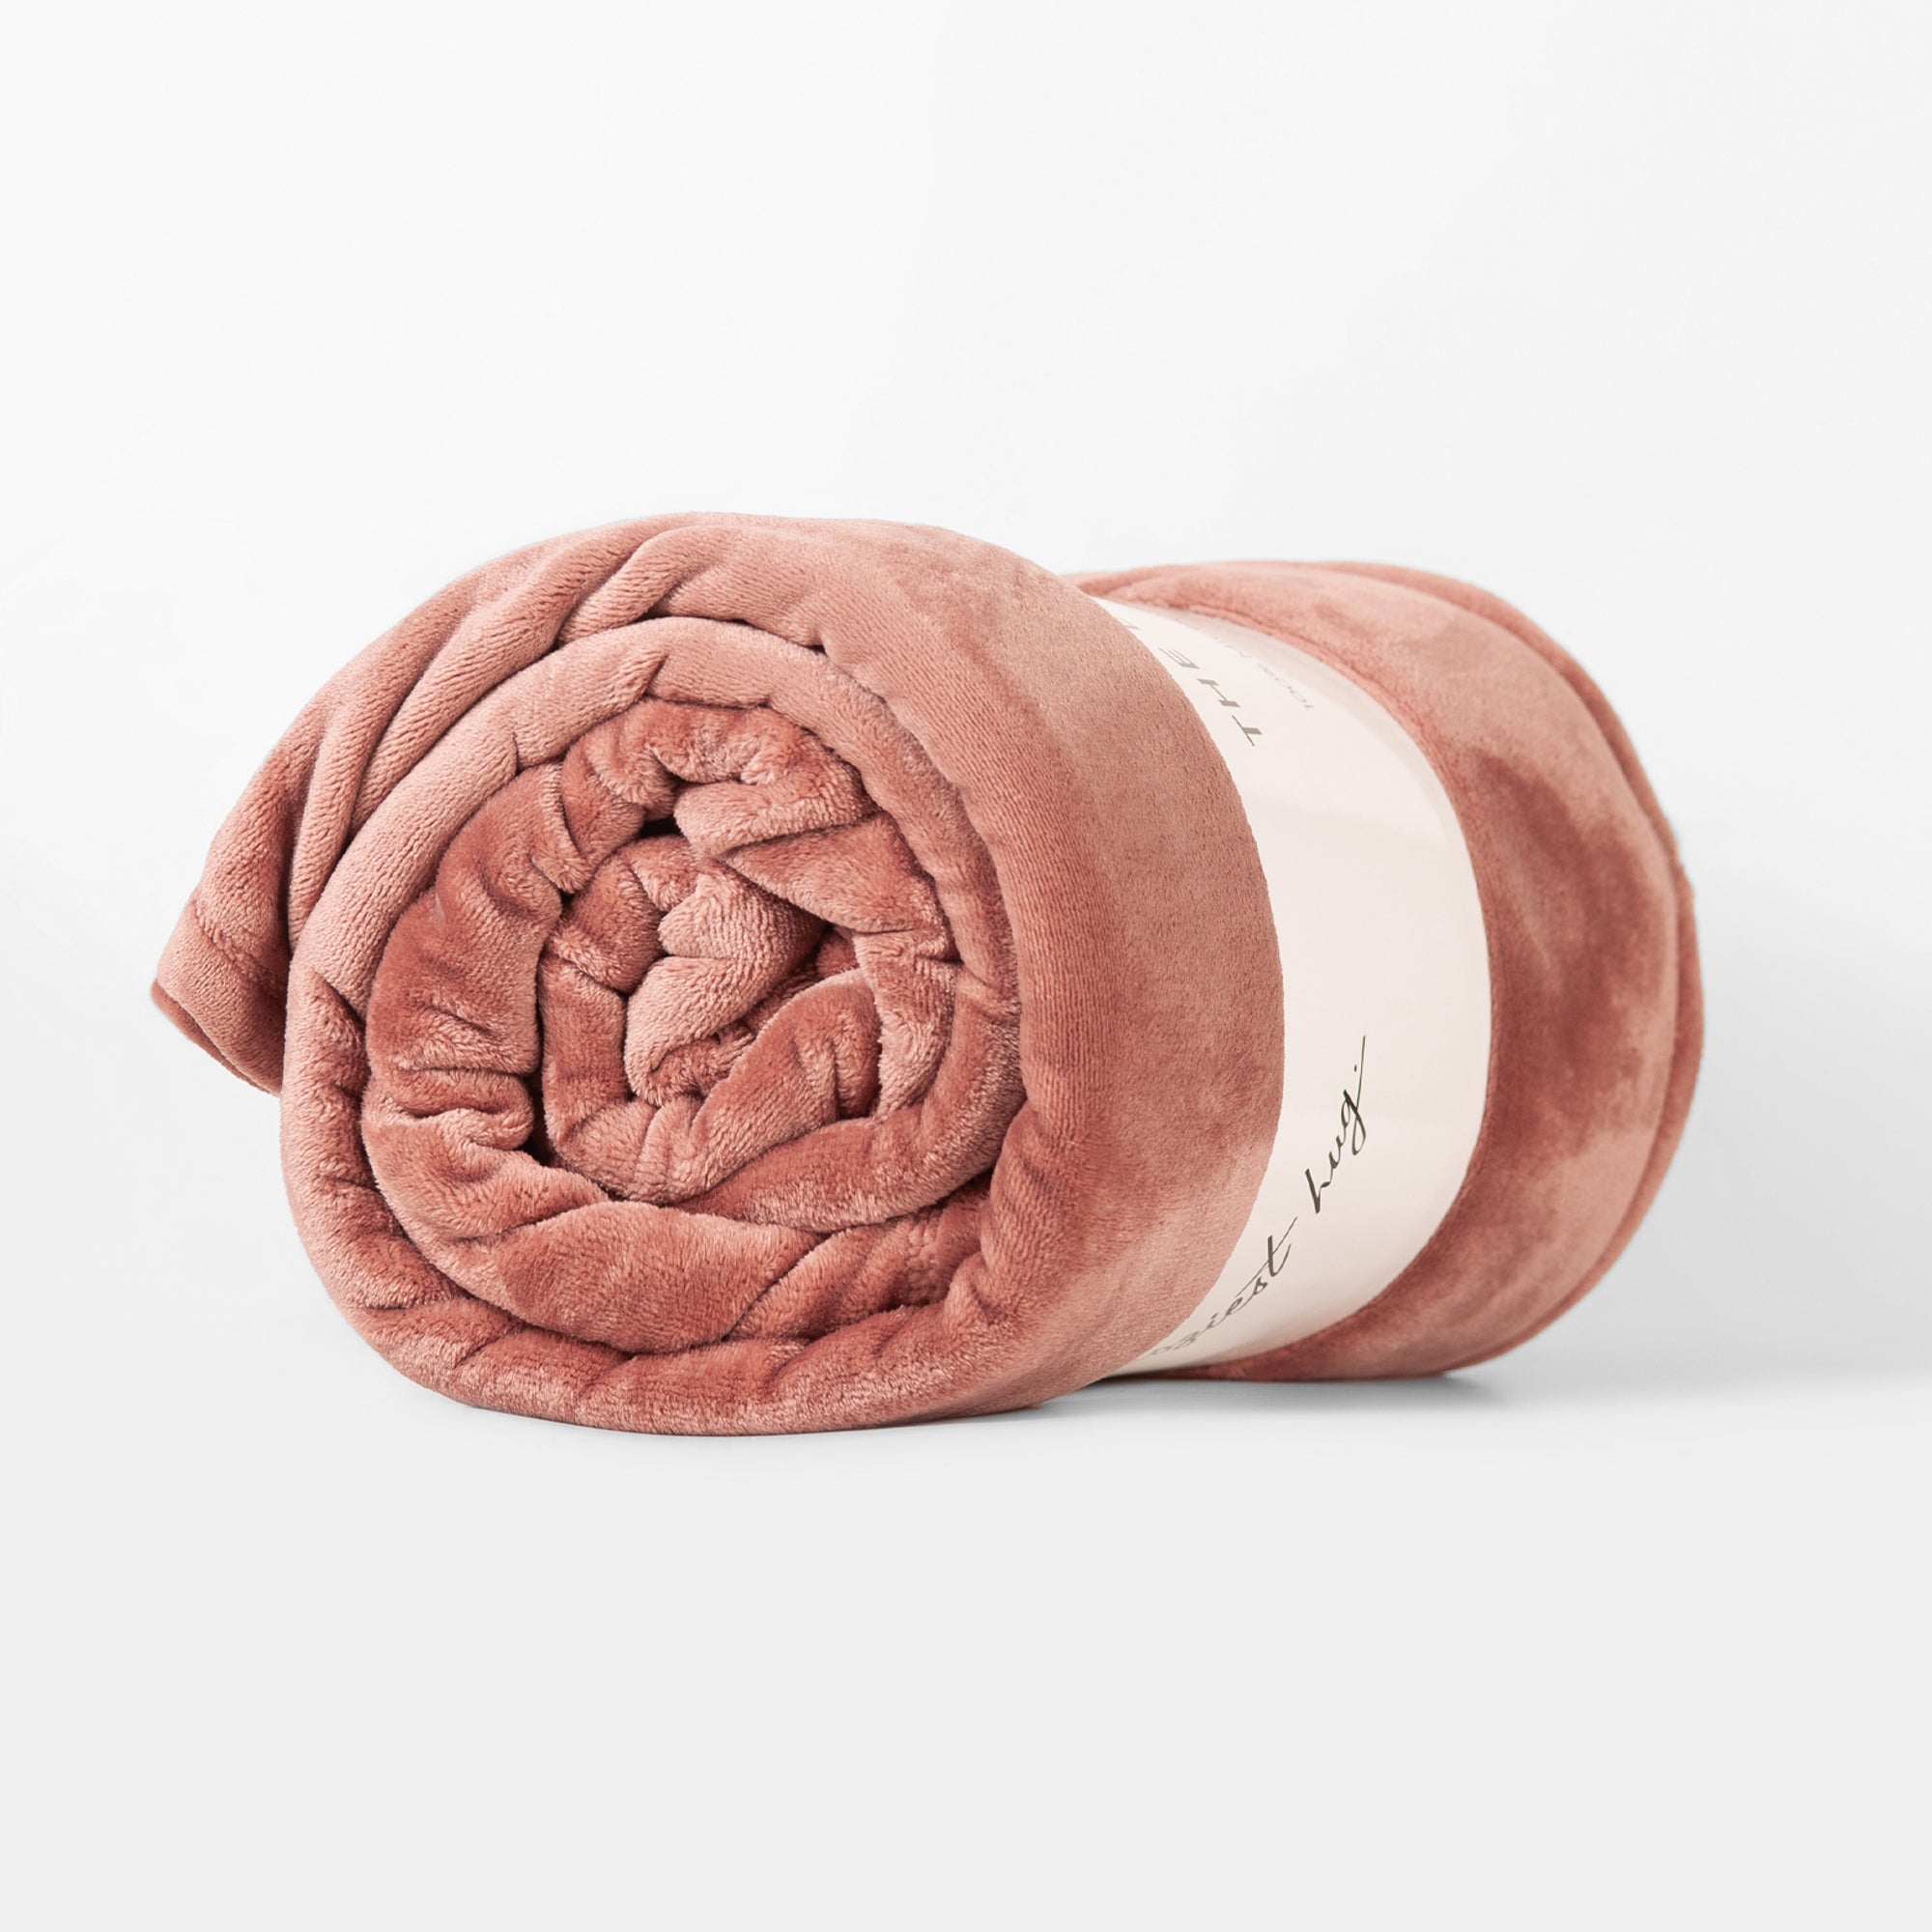 The Linen Company Accessories Rose Wood Micro Fiber Plush Blankets